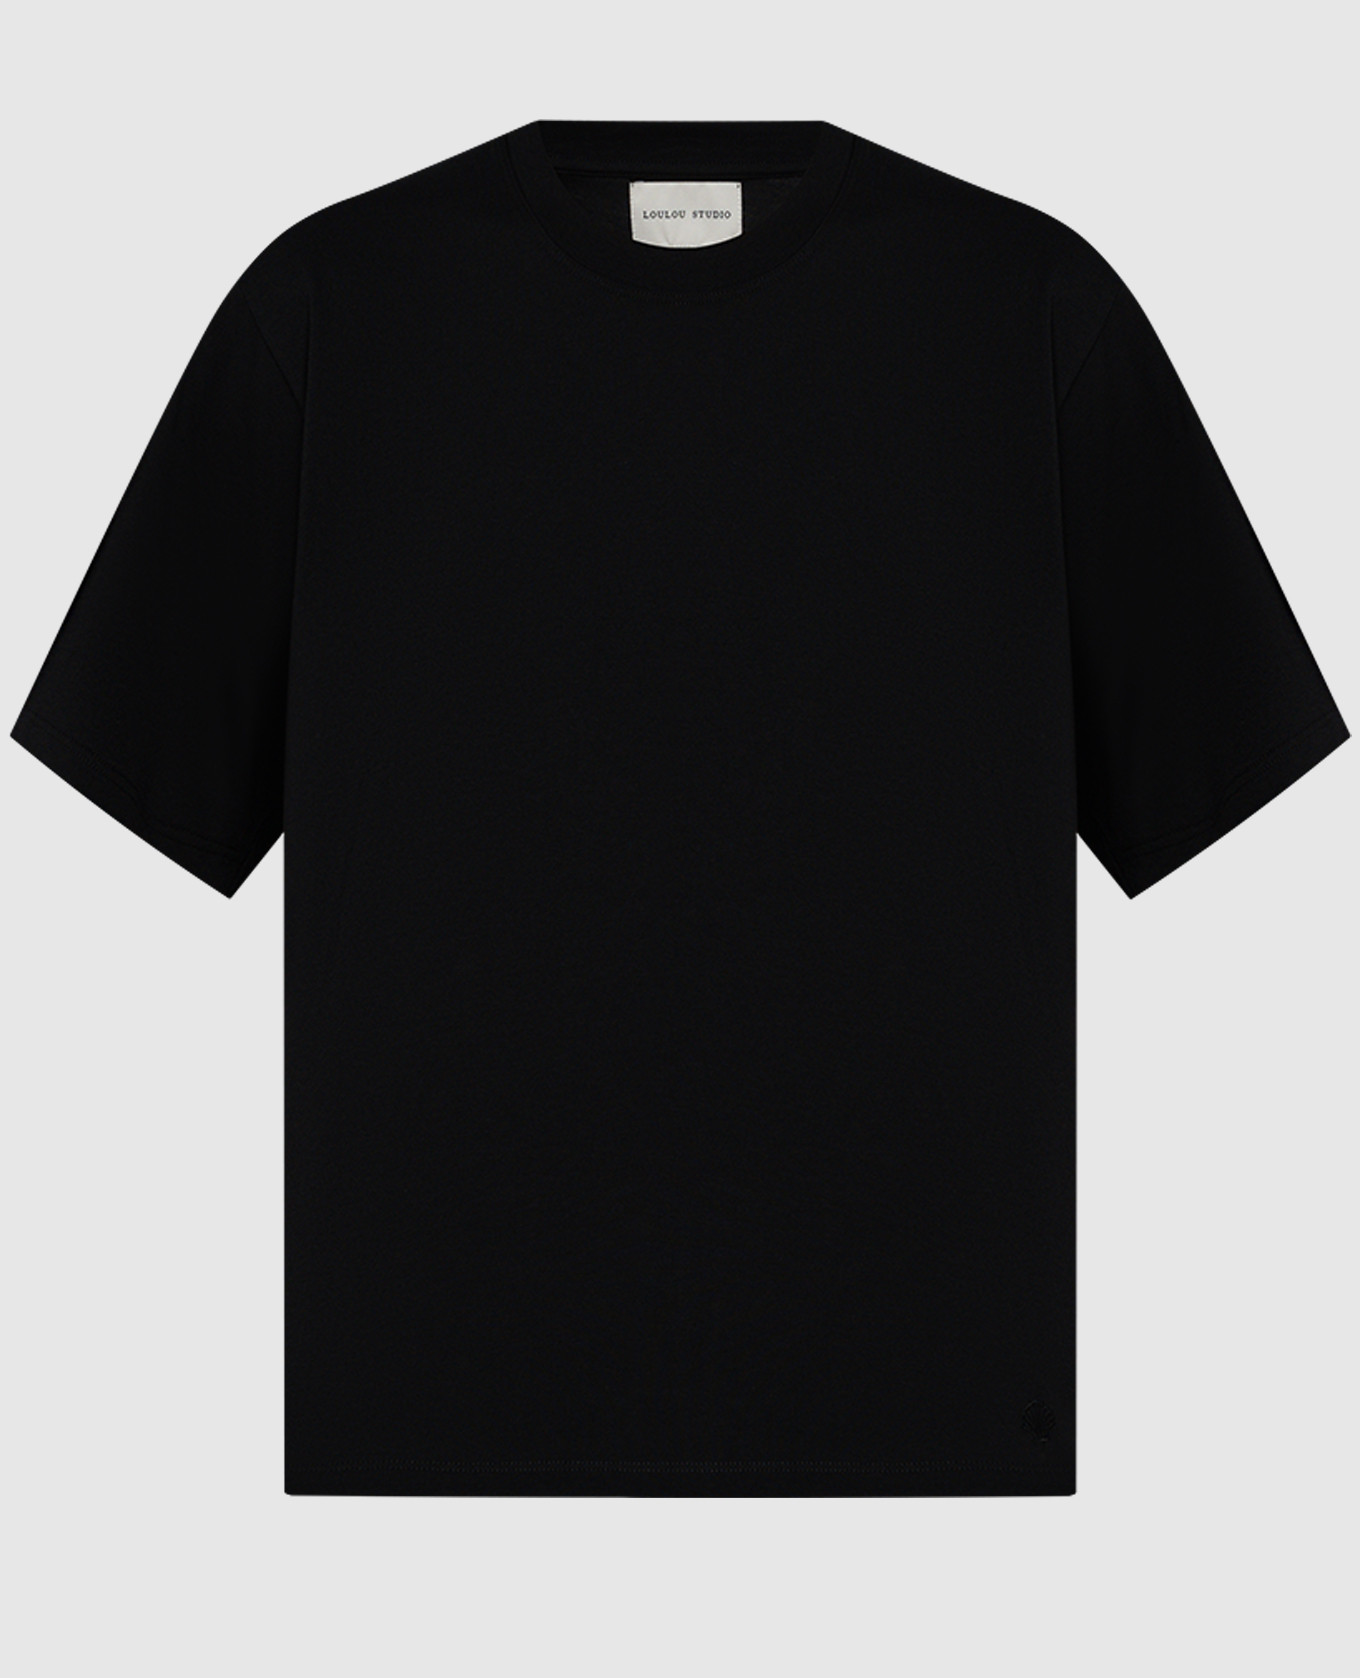 Black T-shirt TELANTO with logo